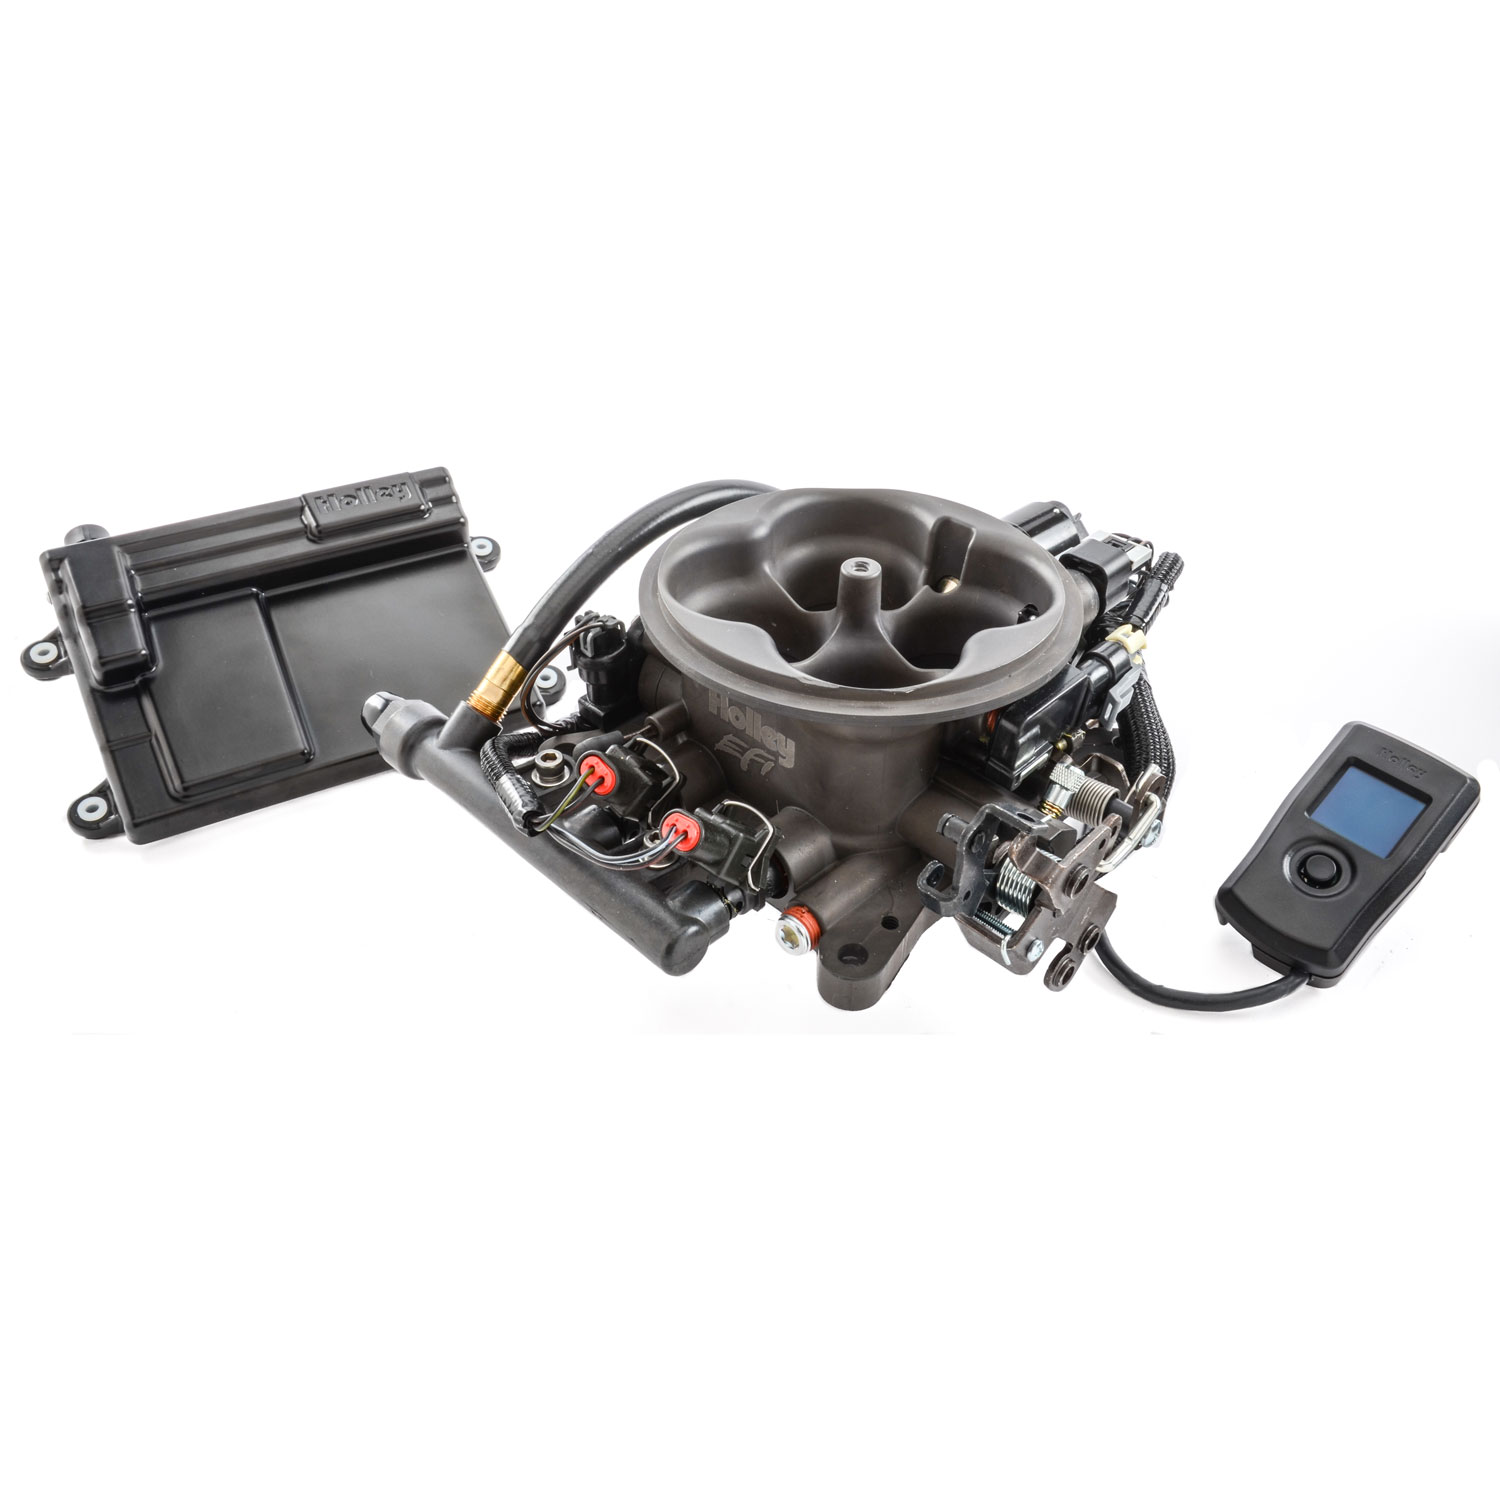 Terminator EFI 4bbl Throttle Body Fuel Injection System